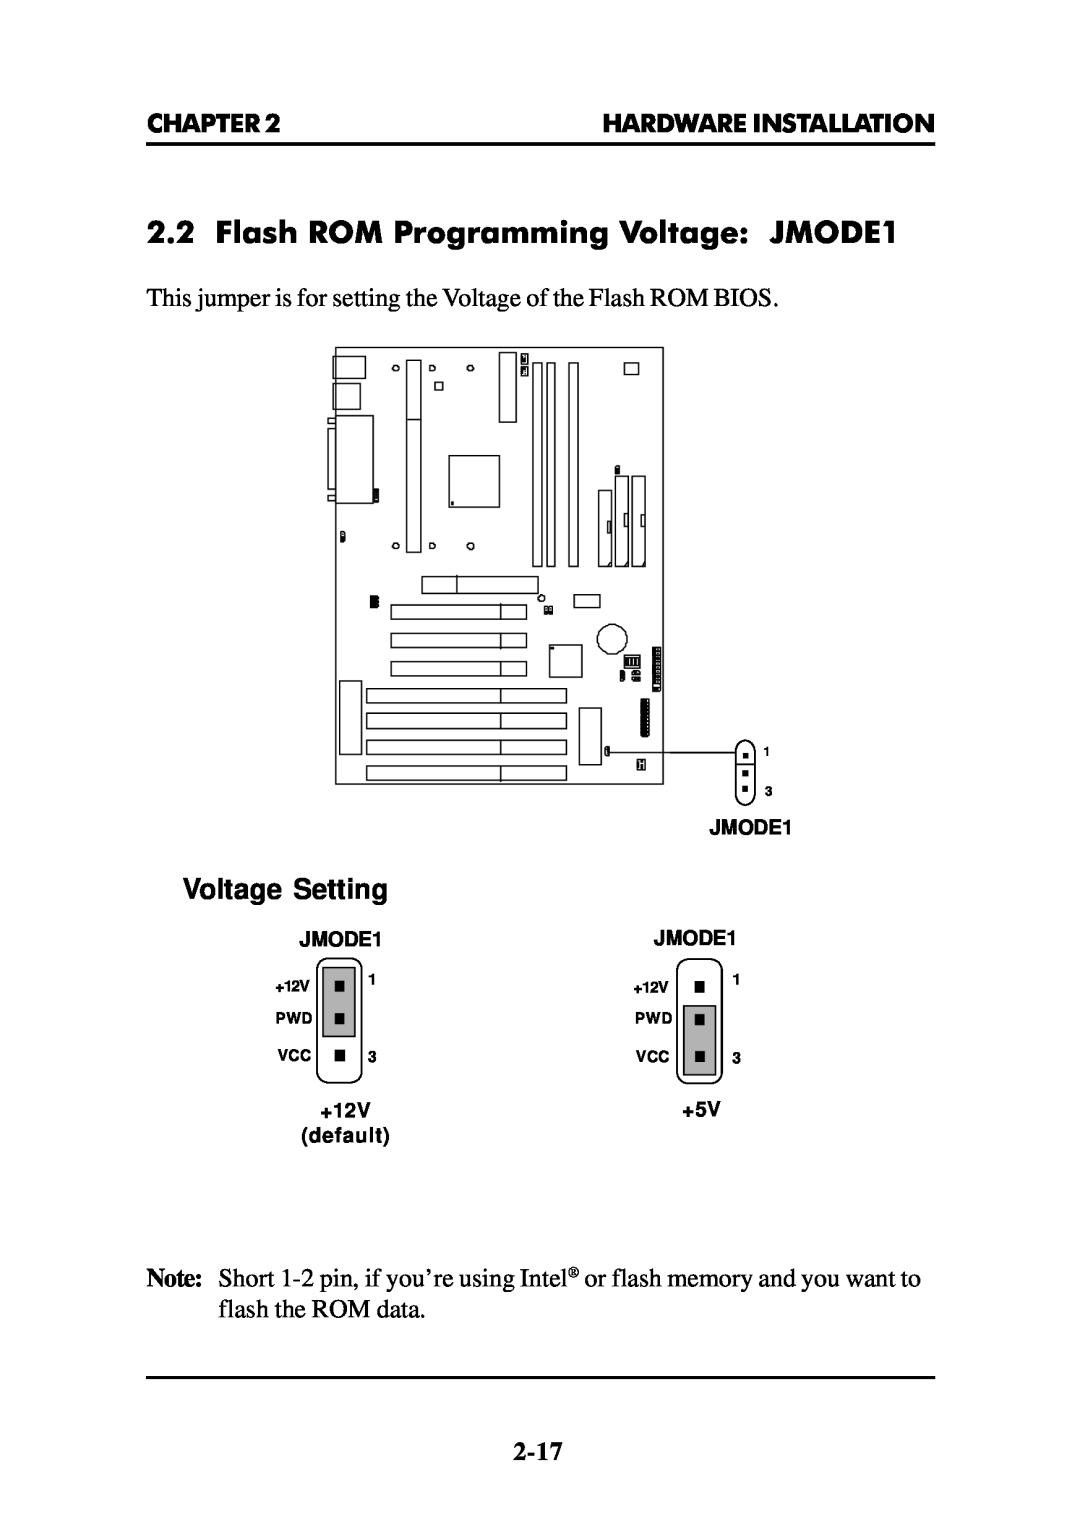 Intel MS-6112 manual Flash ROM Programming Voltage JMODE1, Voltage Setting, +12V PWD VCC 